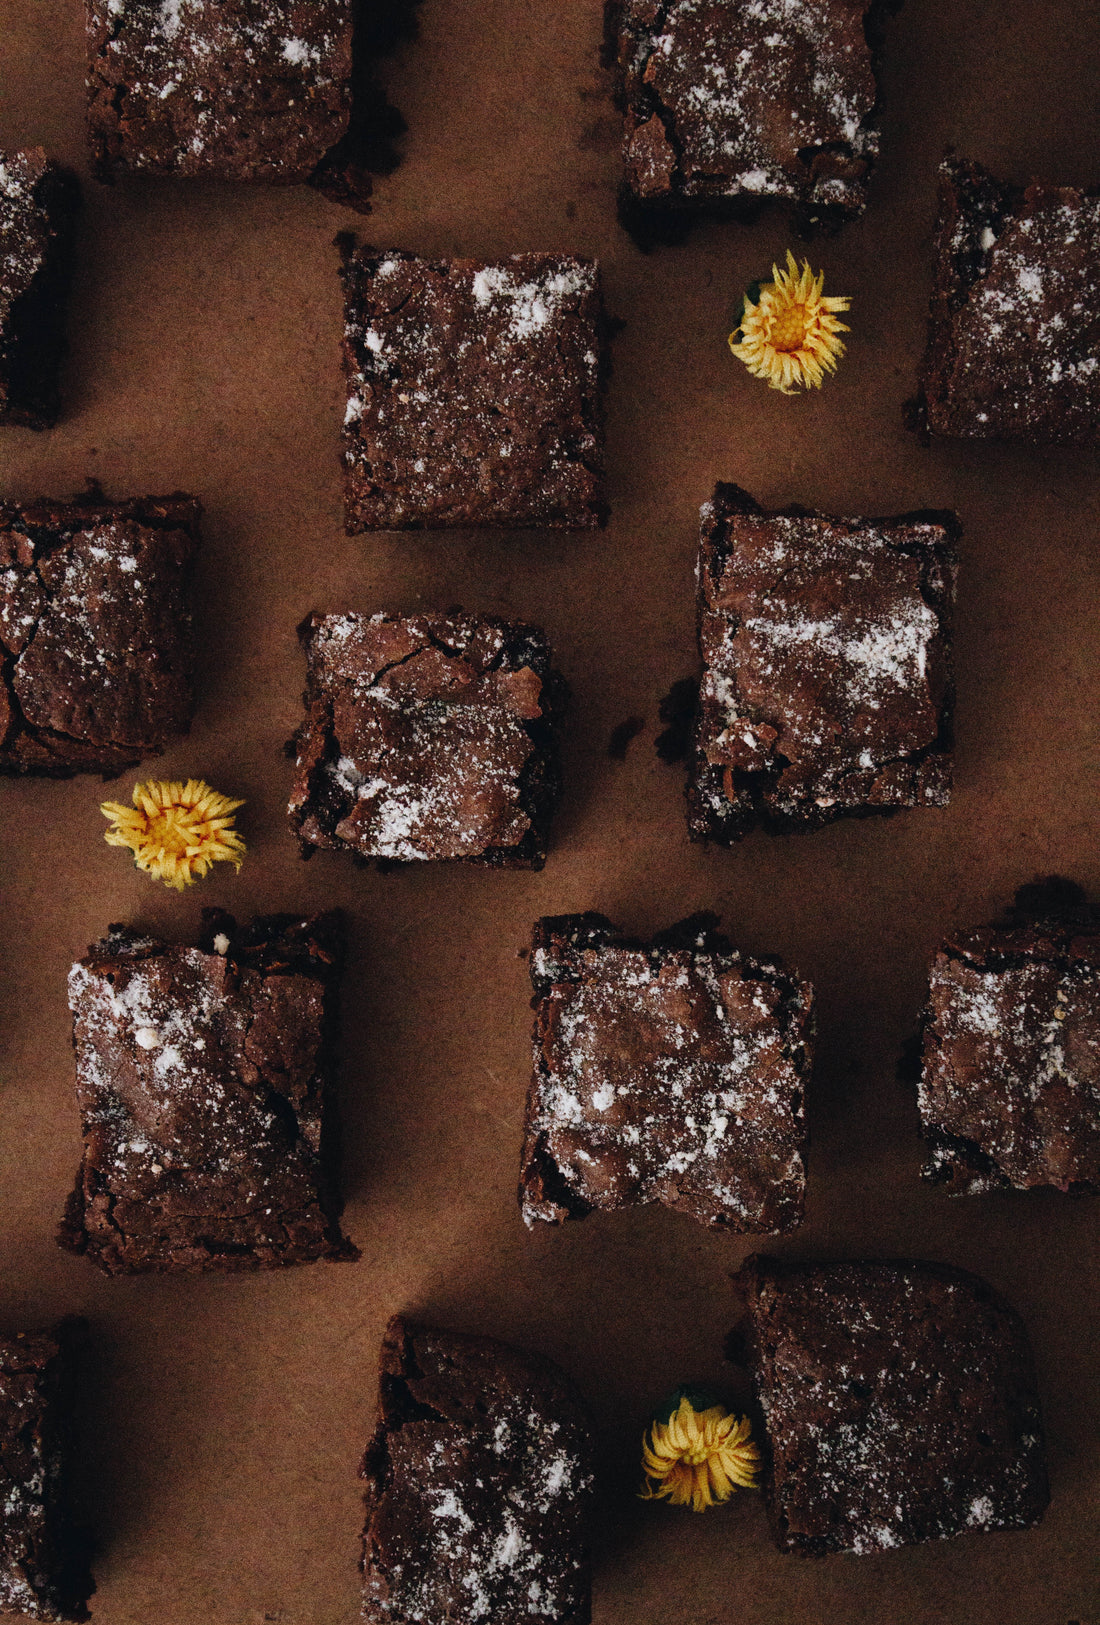 XOCOLATL Recipes, Chapter 3: Brownies and Bars